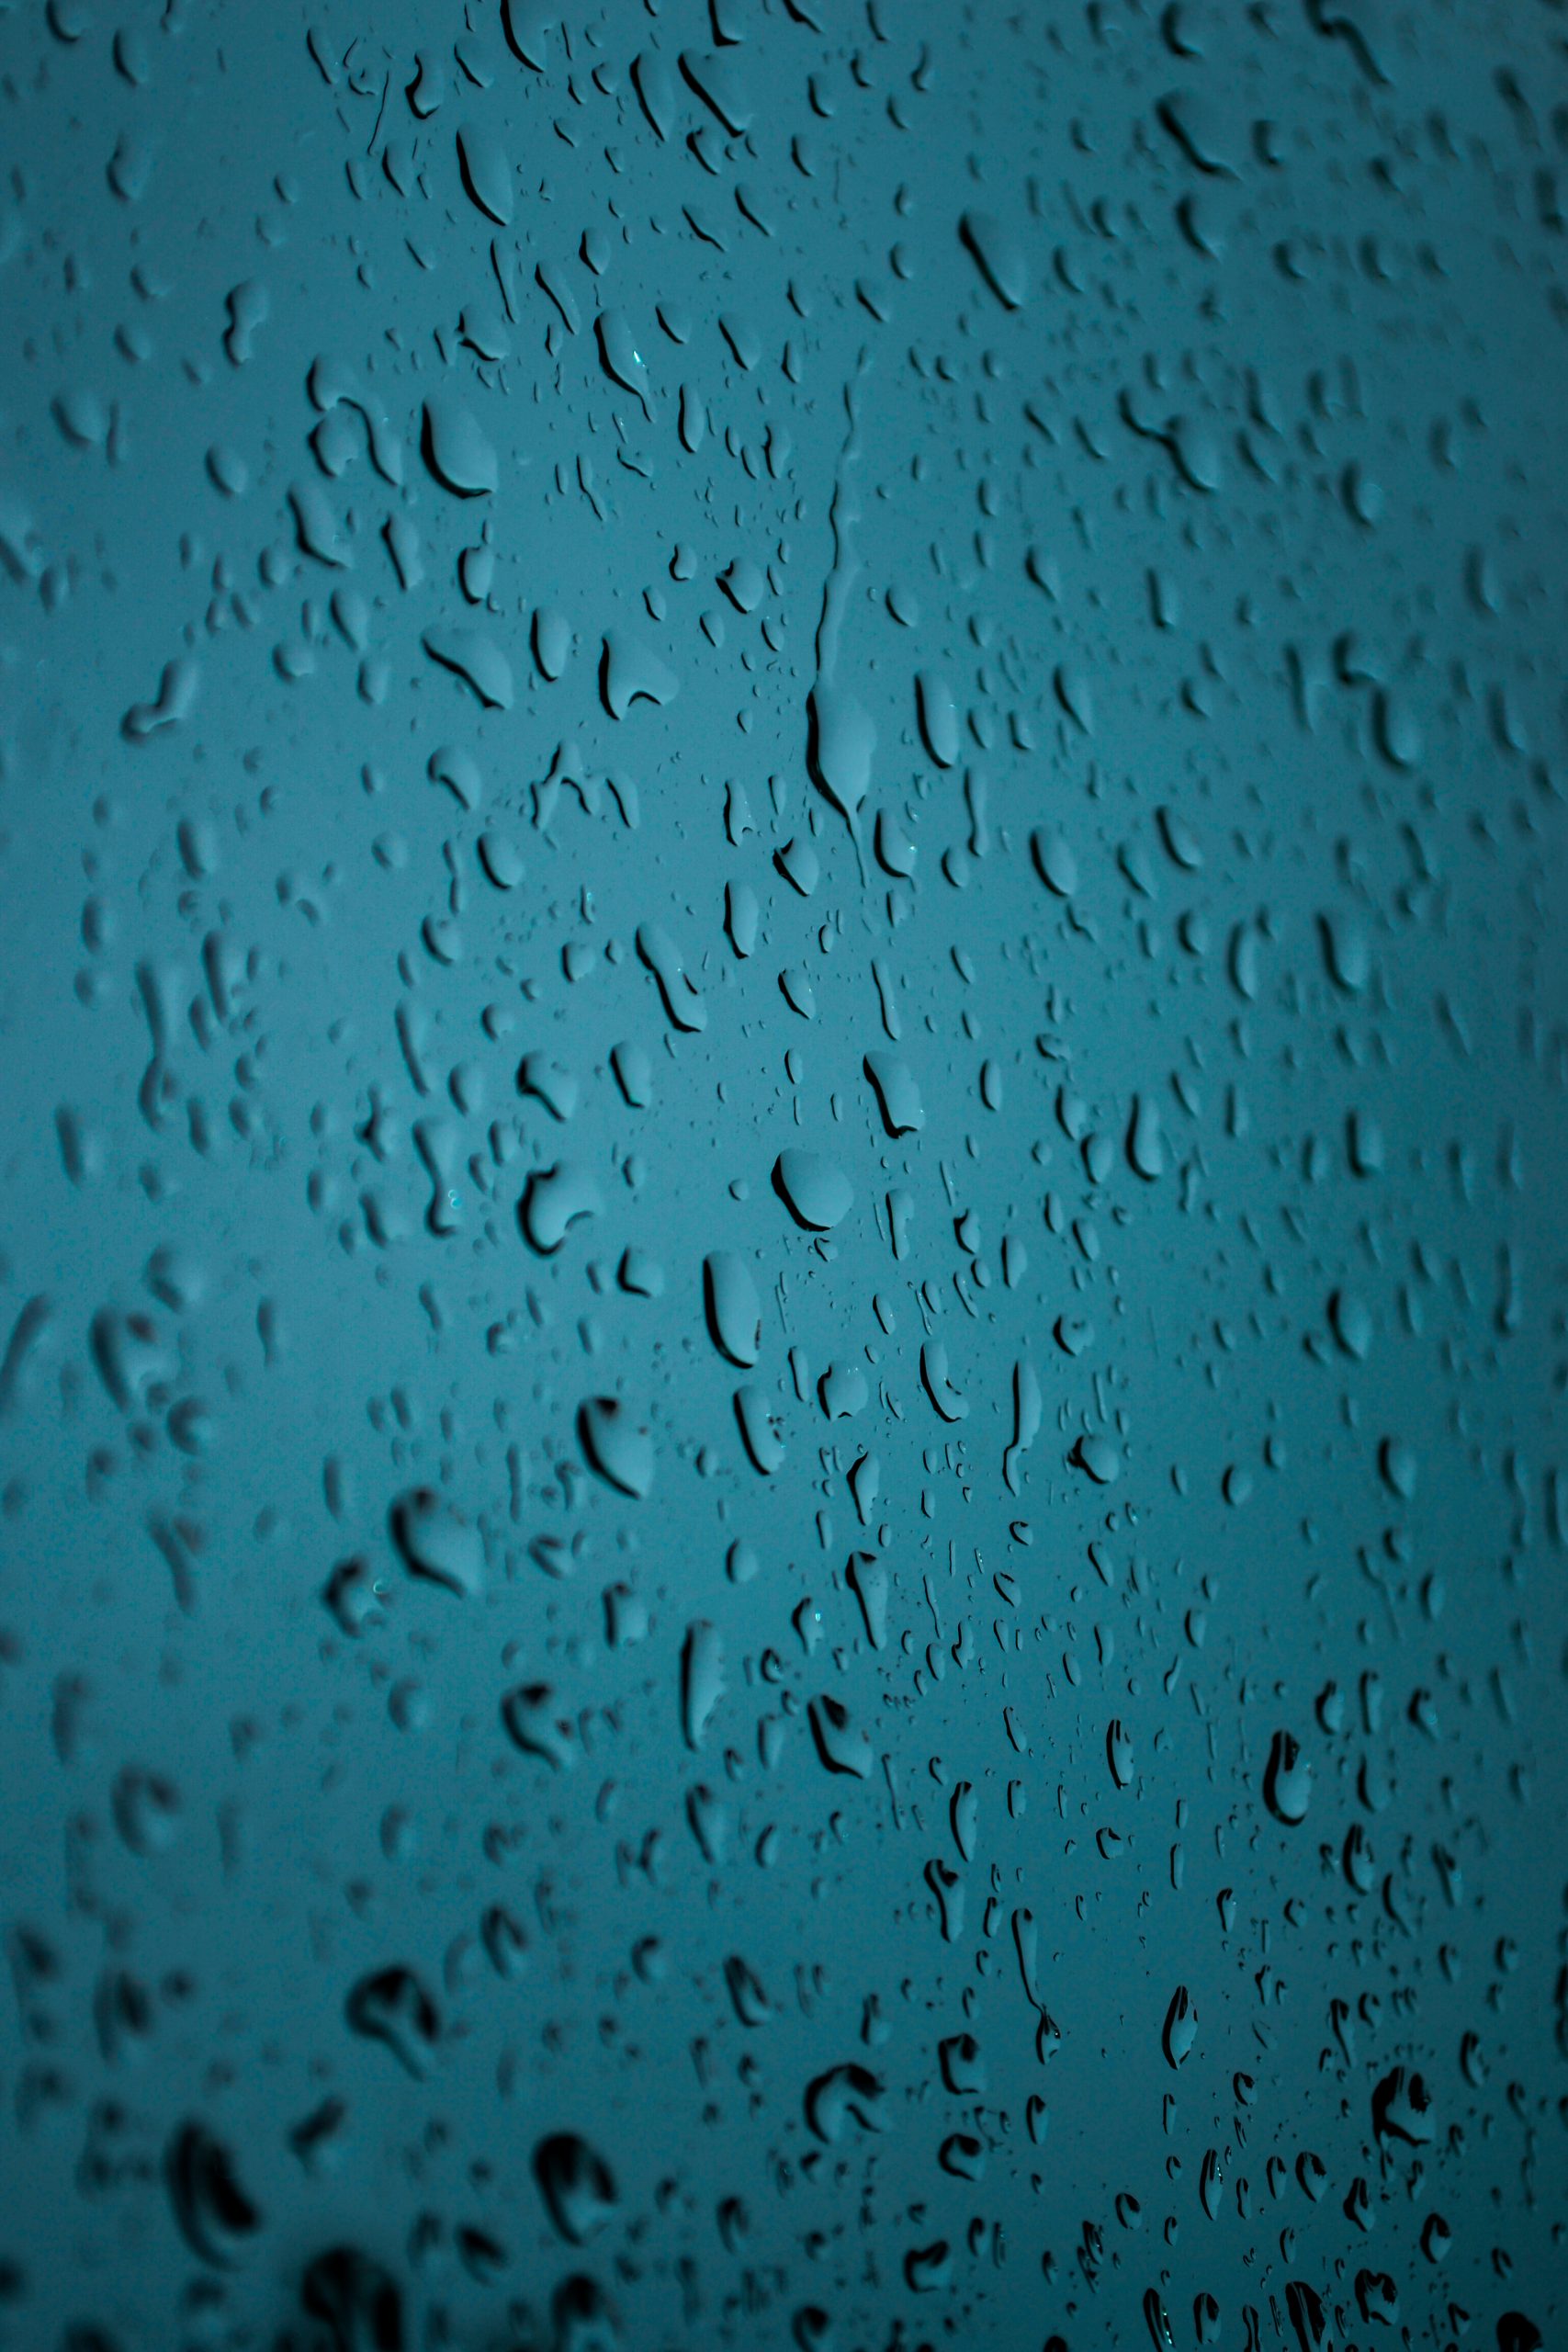 Rain drops on a glass